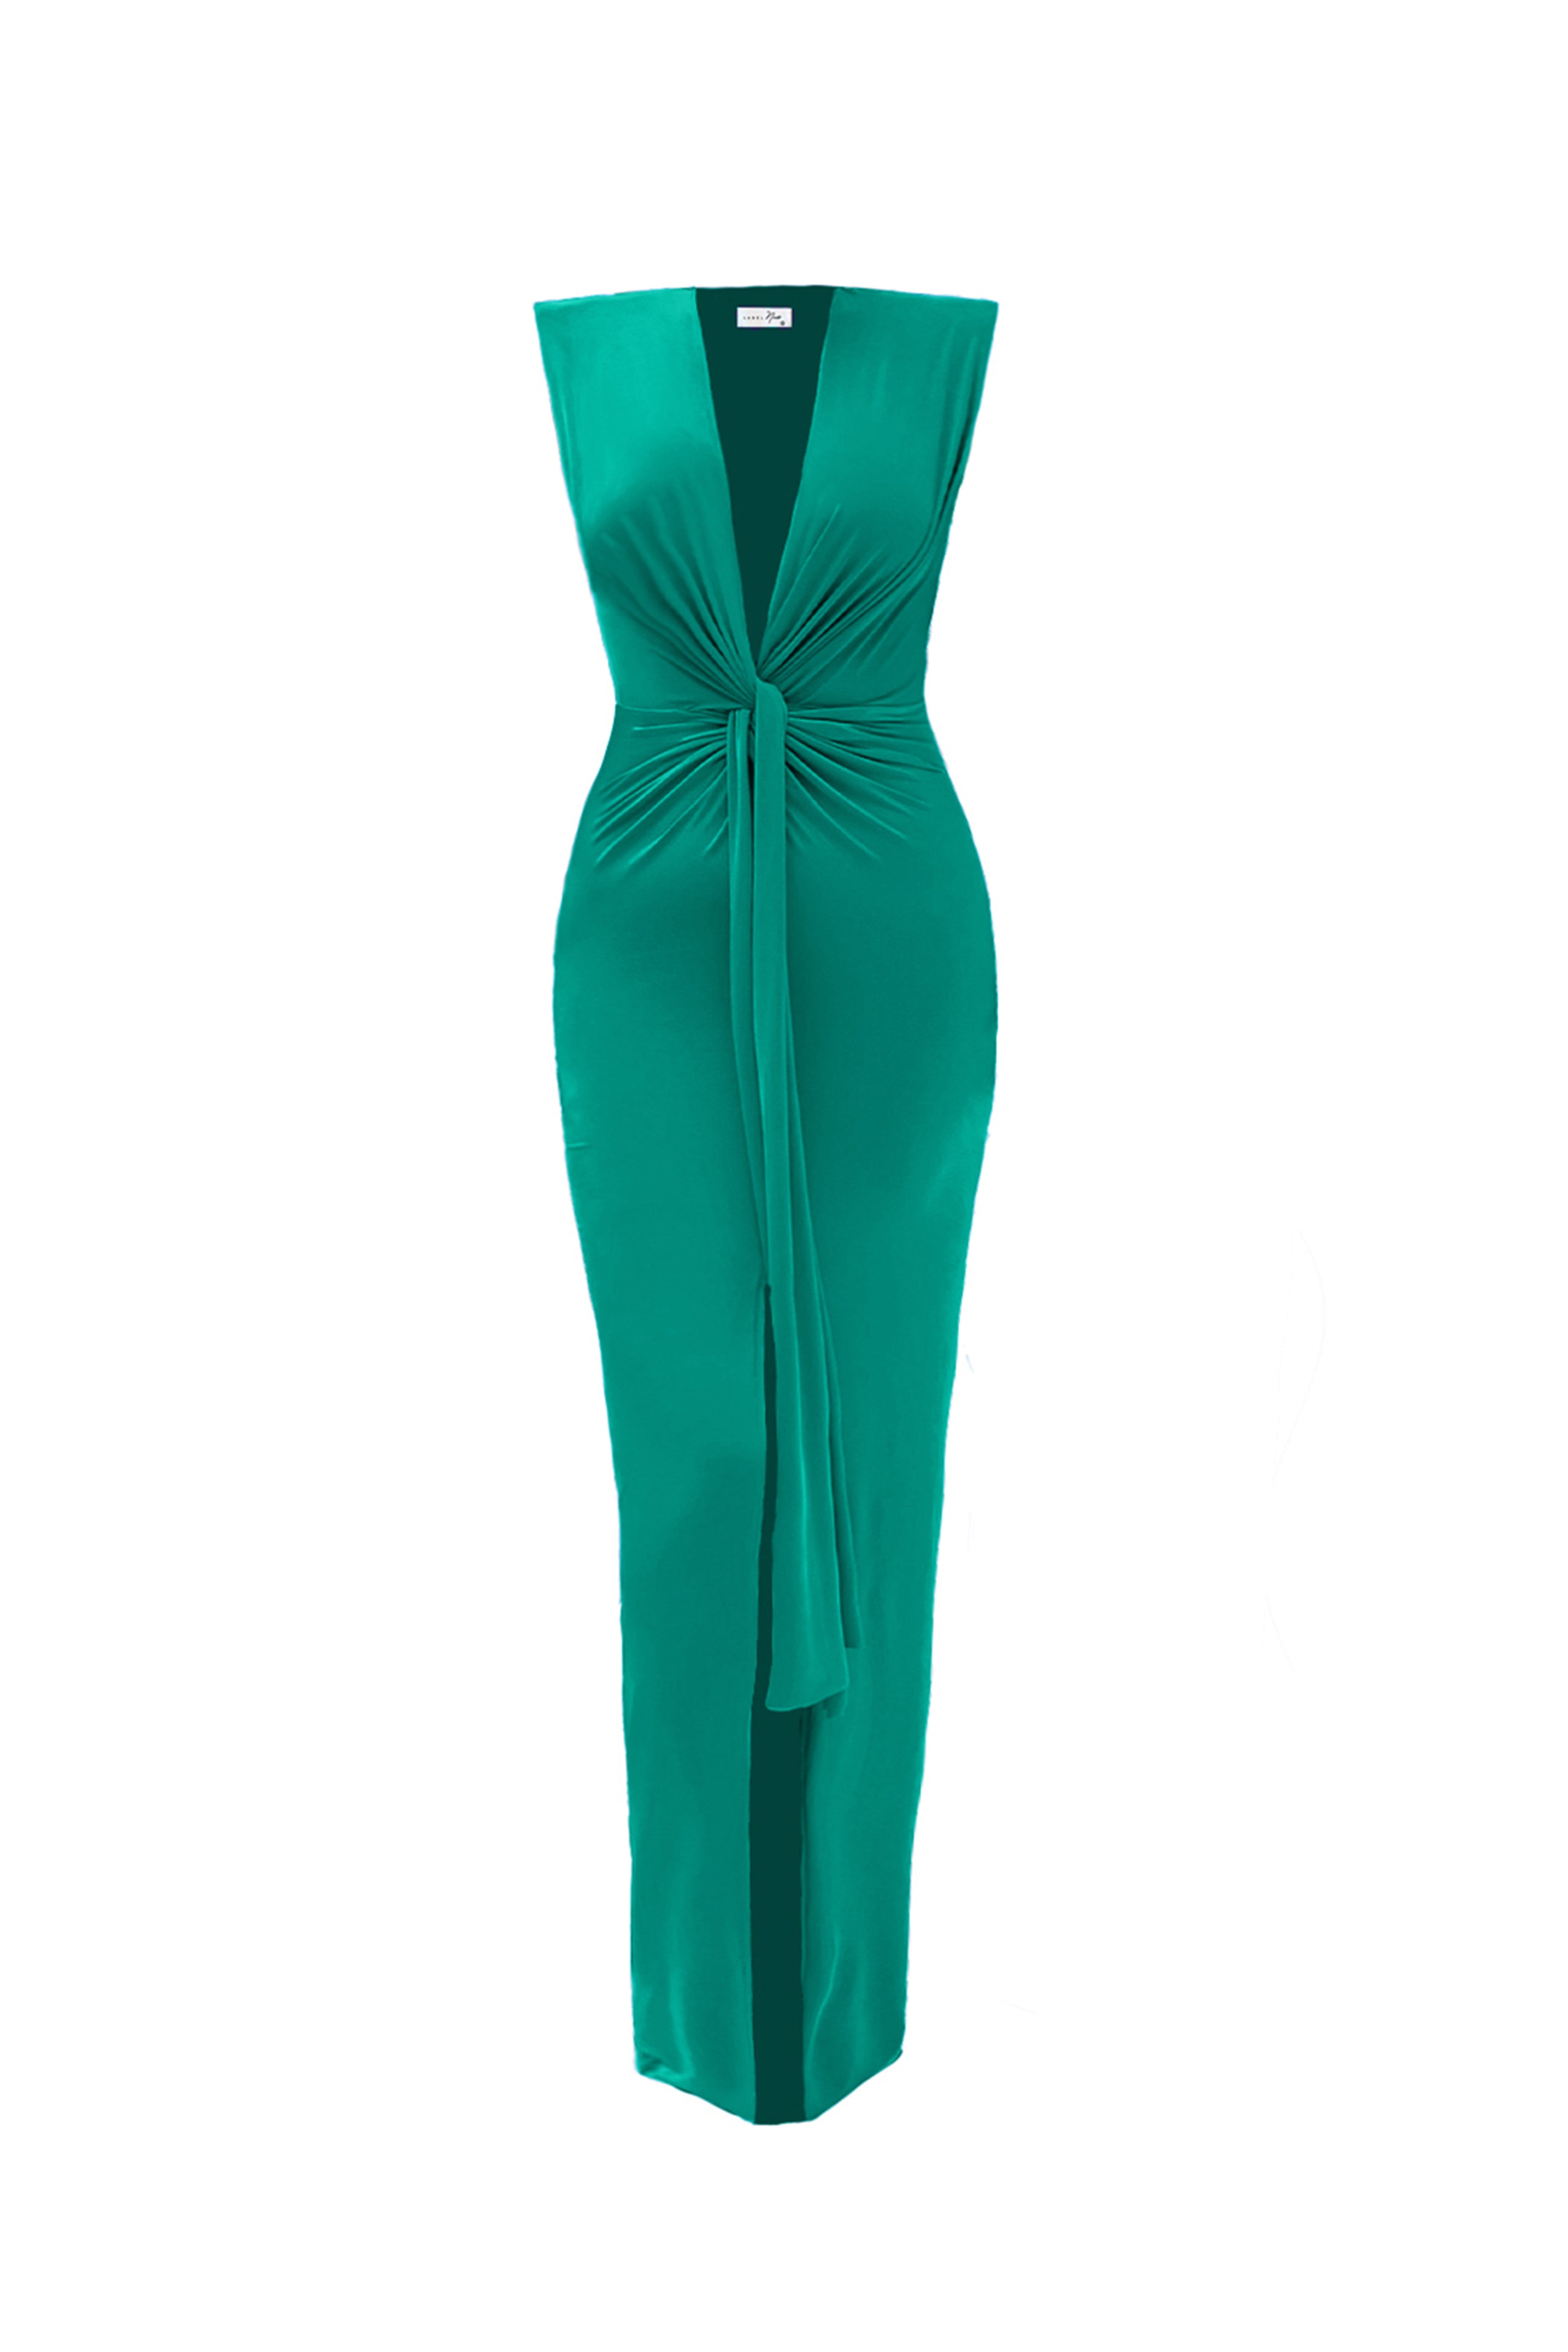 Orsa Kelly Green Dress